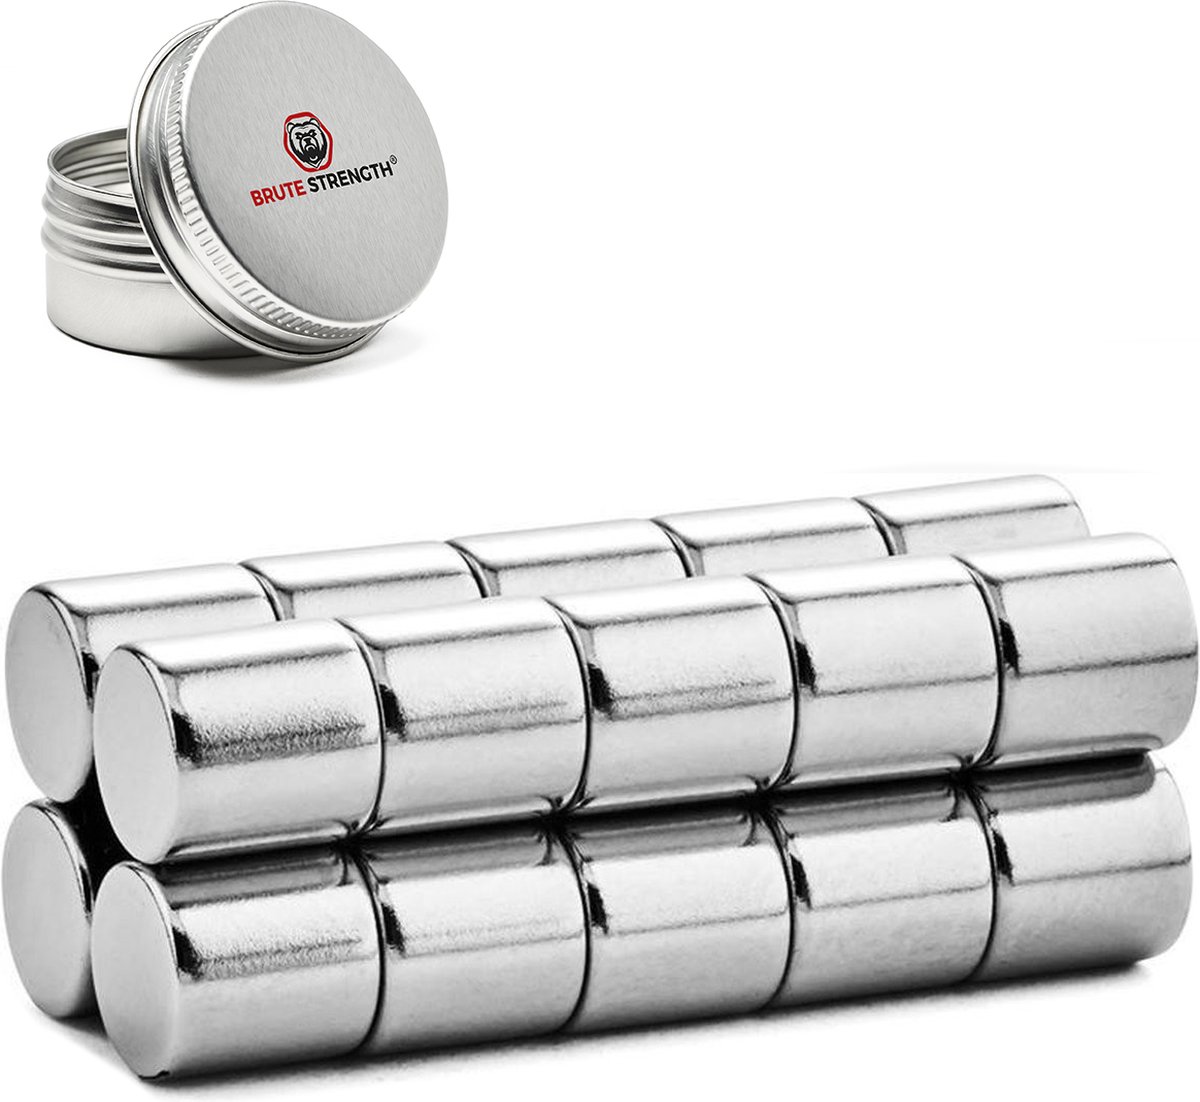 Brute Strength - Super sterke magneten - Rond - 10 x 10 mm - 20 stuks - Neodymium magneet sterk - Voor koelkast - whiteboard